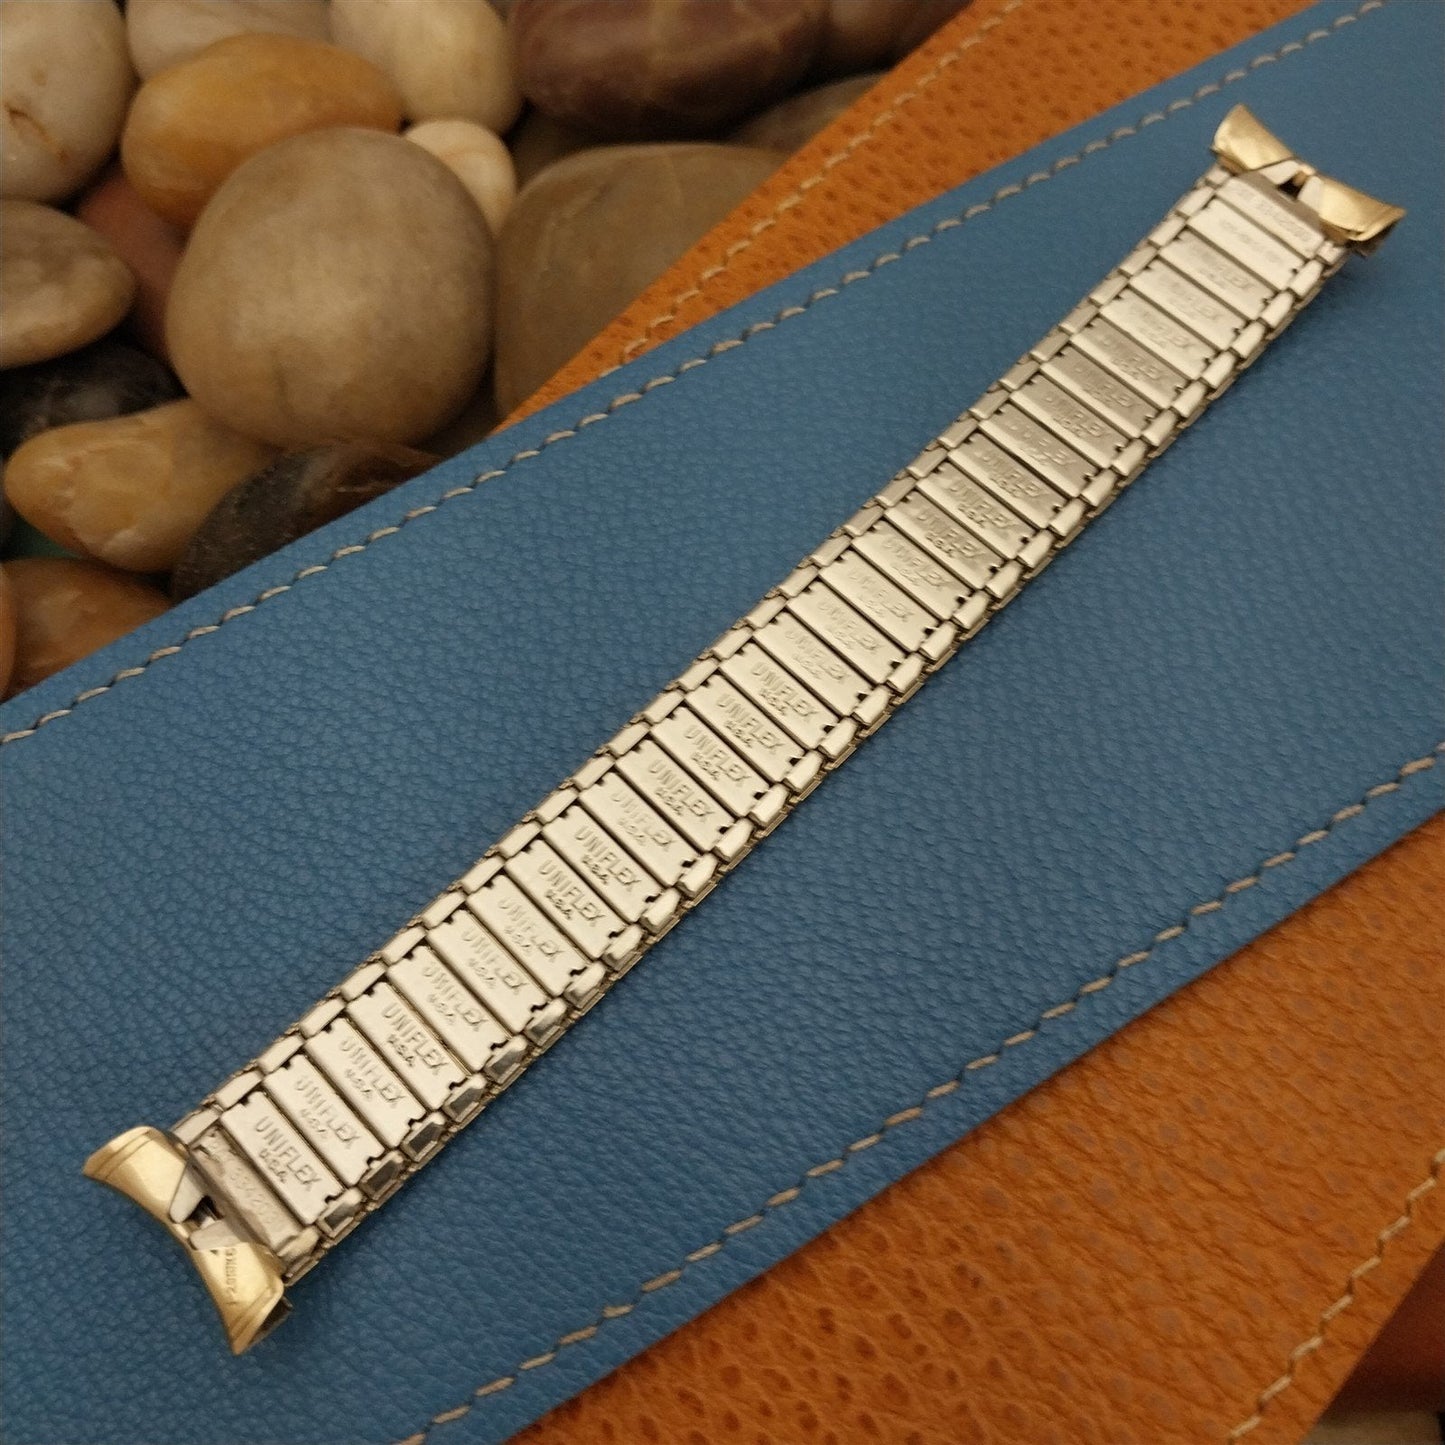 19mm 18mm 16mm Gold-Filled 1960s Vintage Watch Band Uniflex nos Unused Expansion